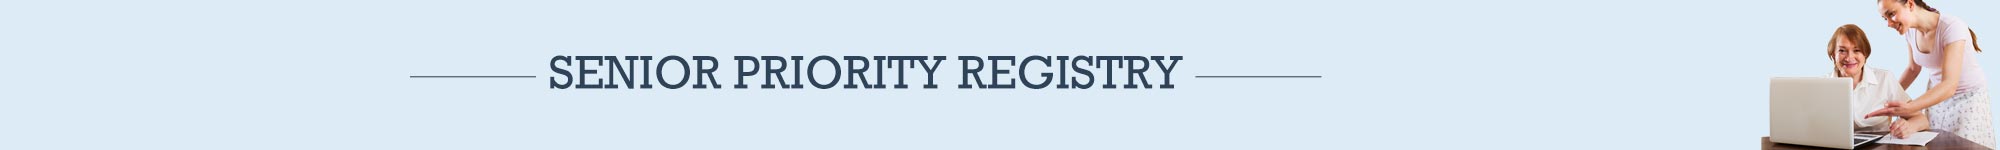 Senior Priority Registry